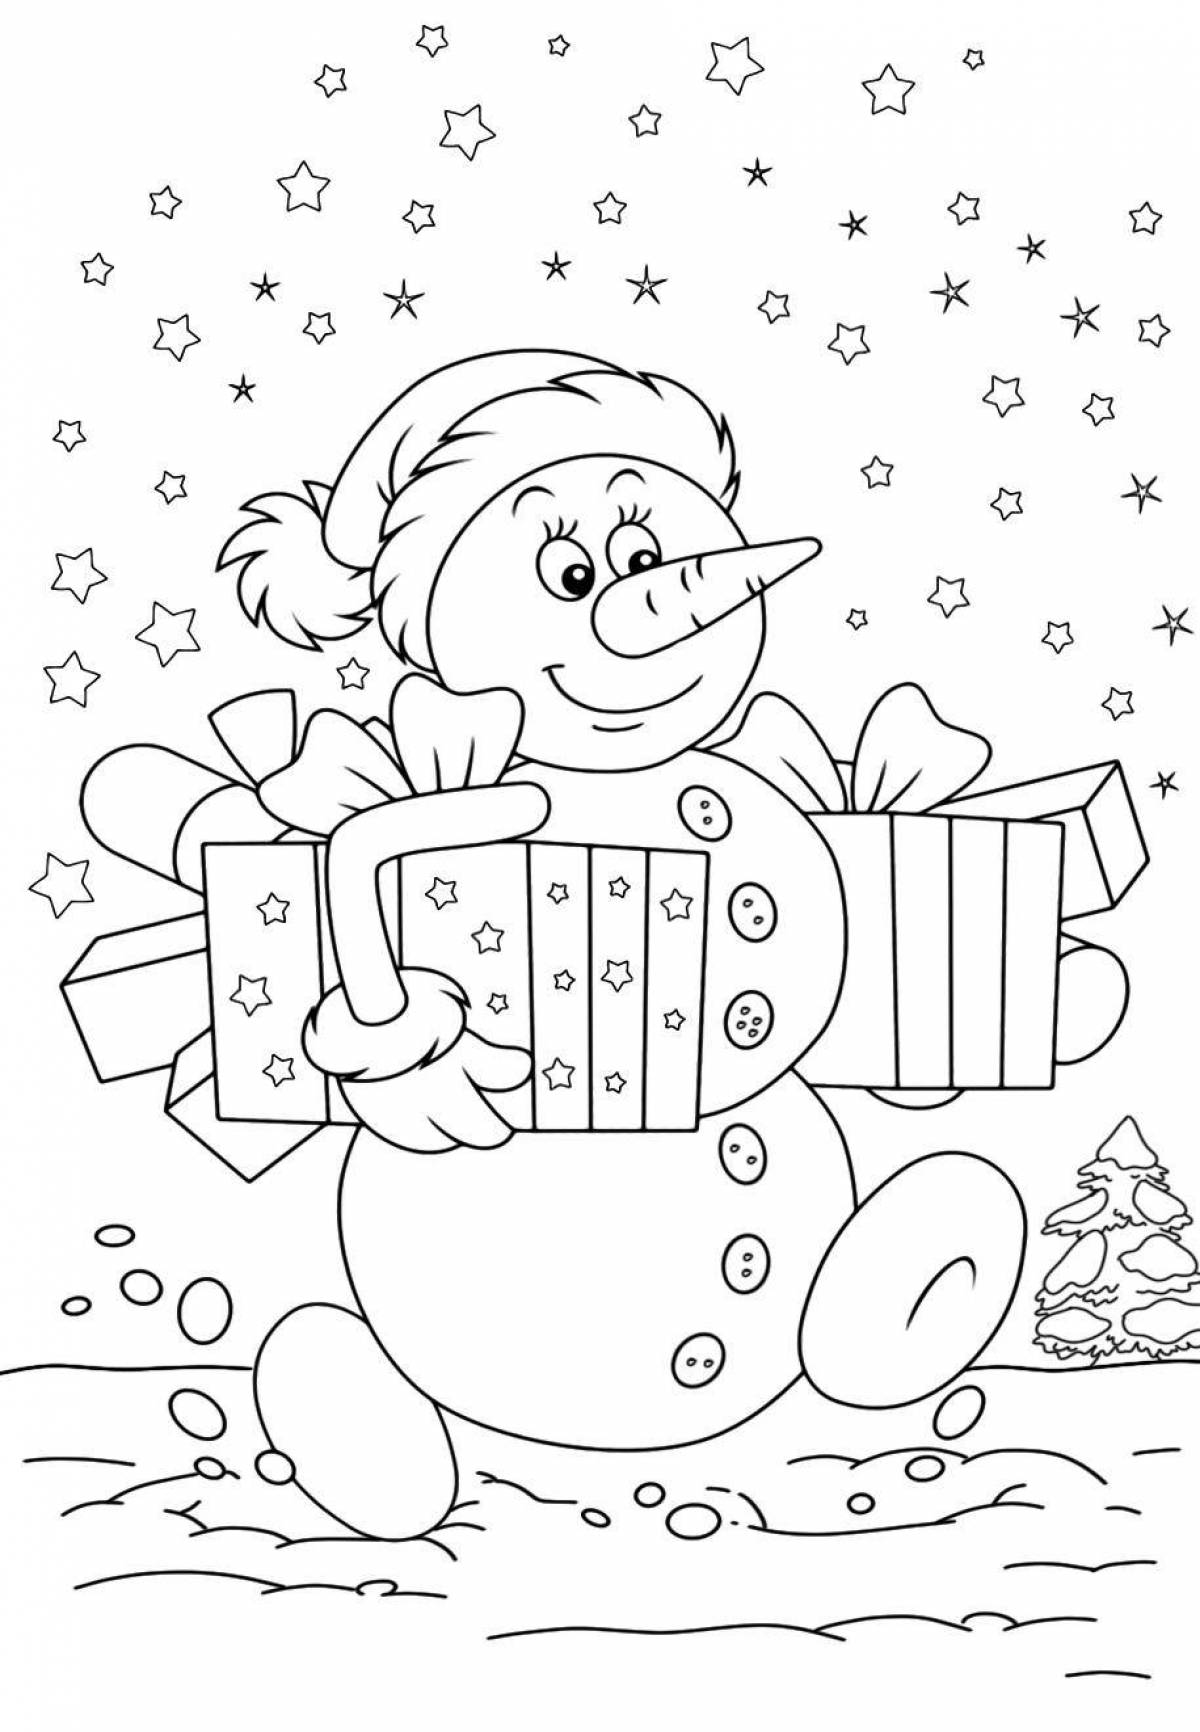 Magic snowmen coloring page